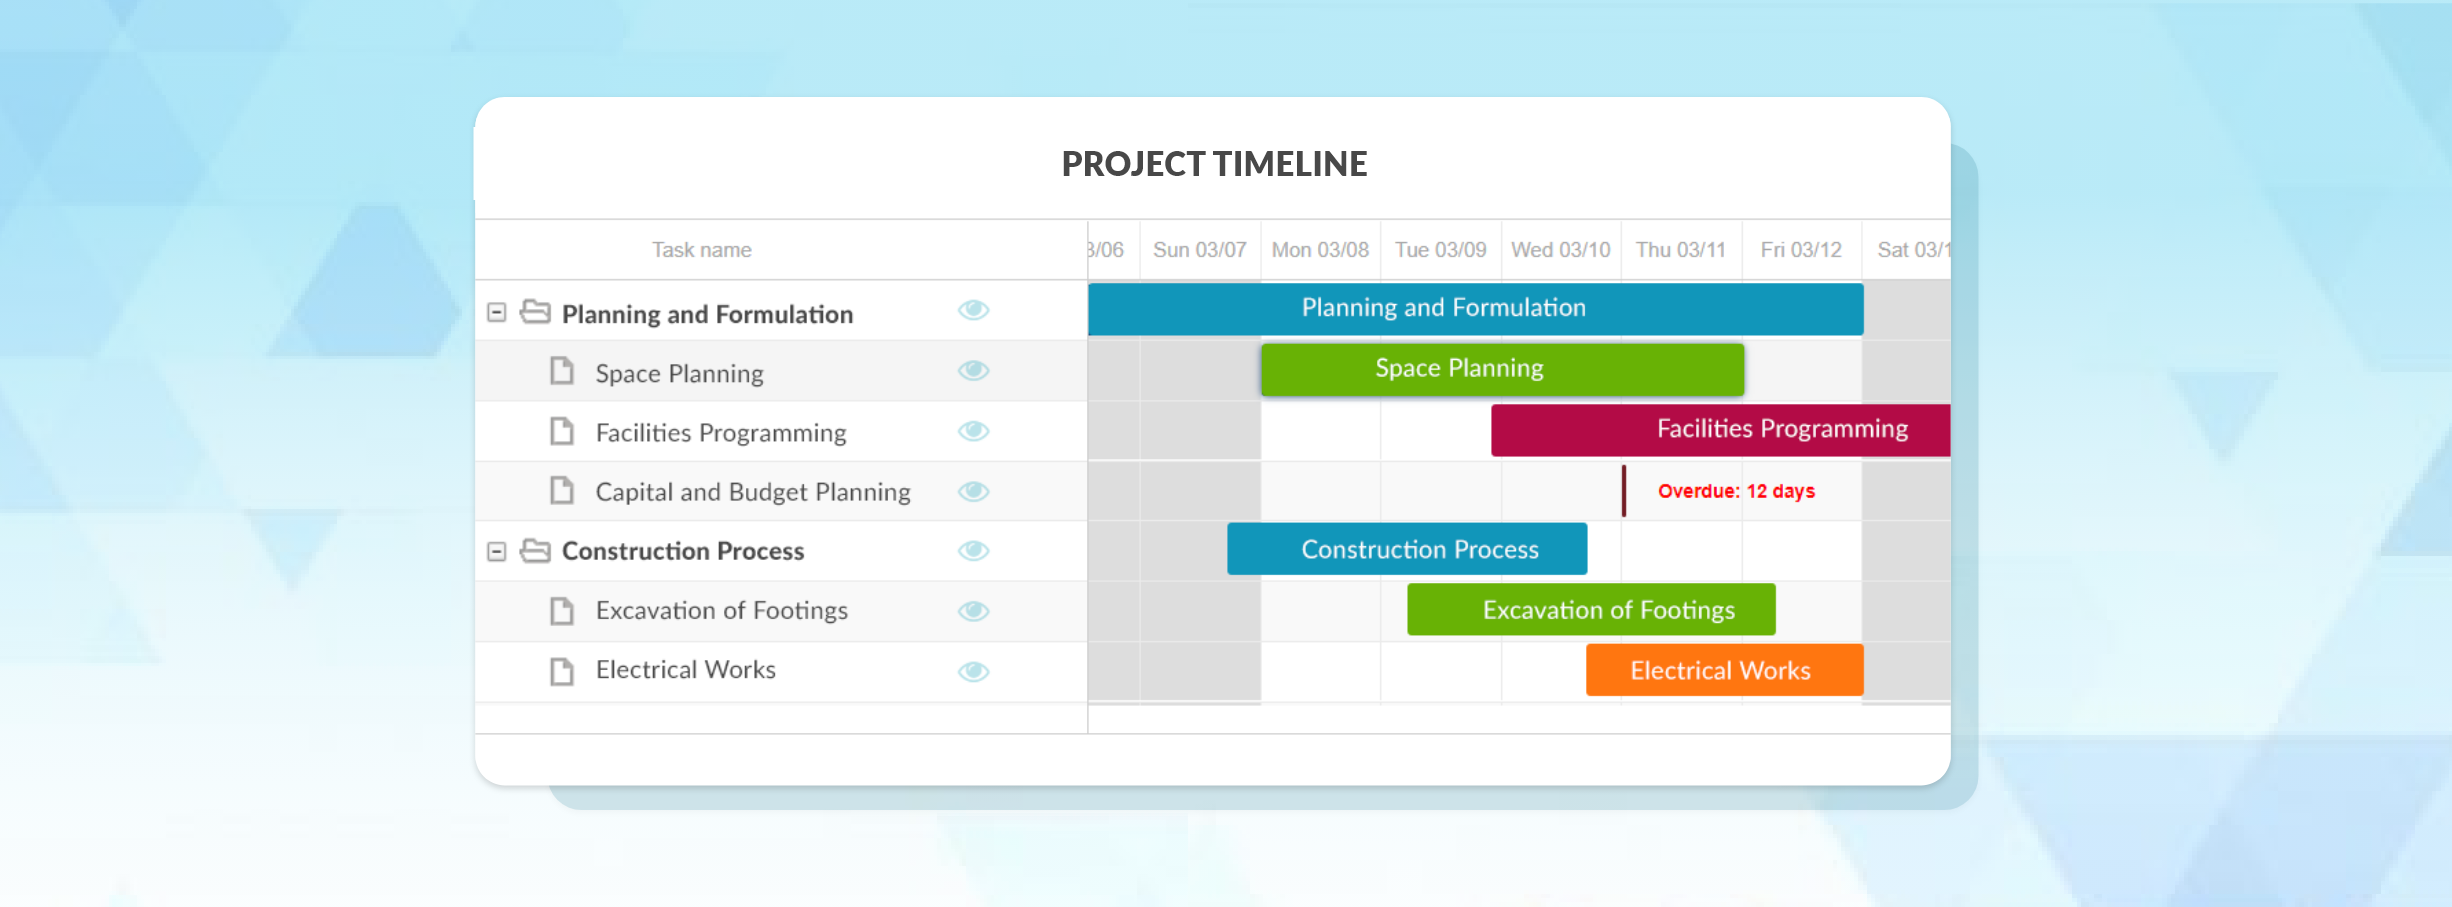 Streamline Project Management Tasks With Custom Gantt Charts